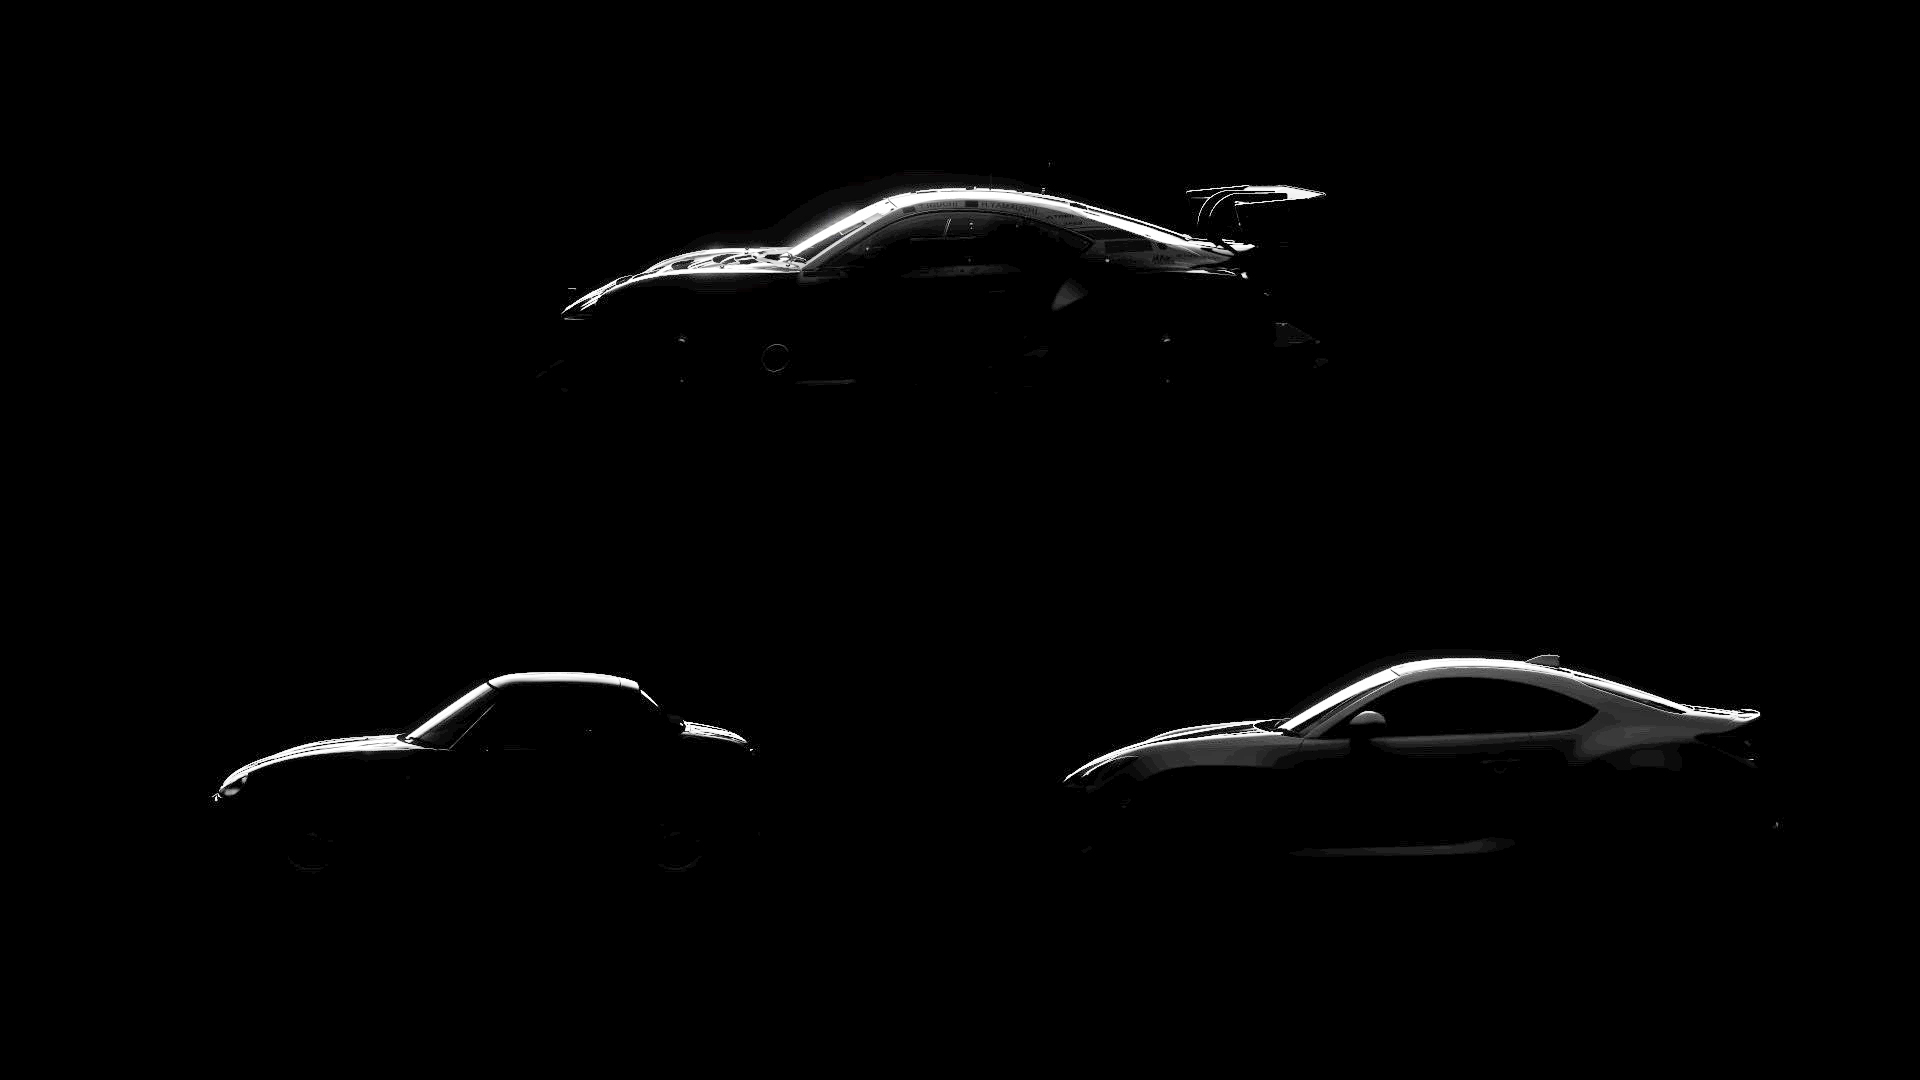 Gran Turismo 7 April 25 update includes three new cars